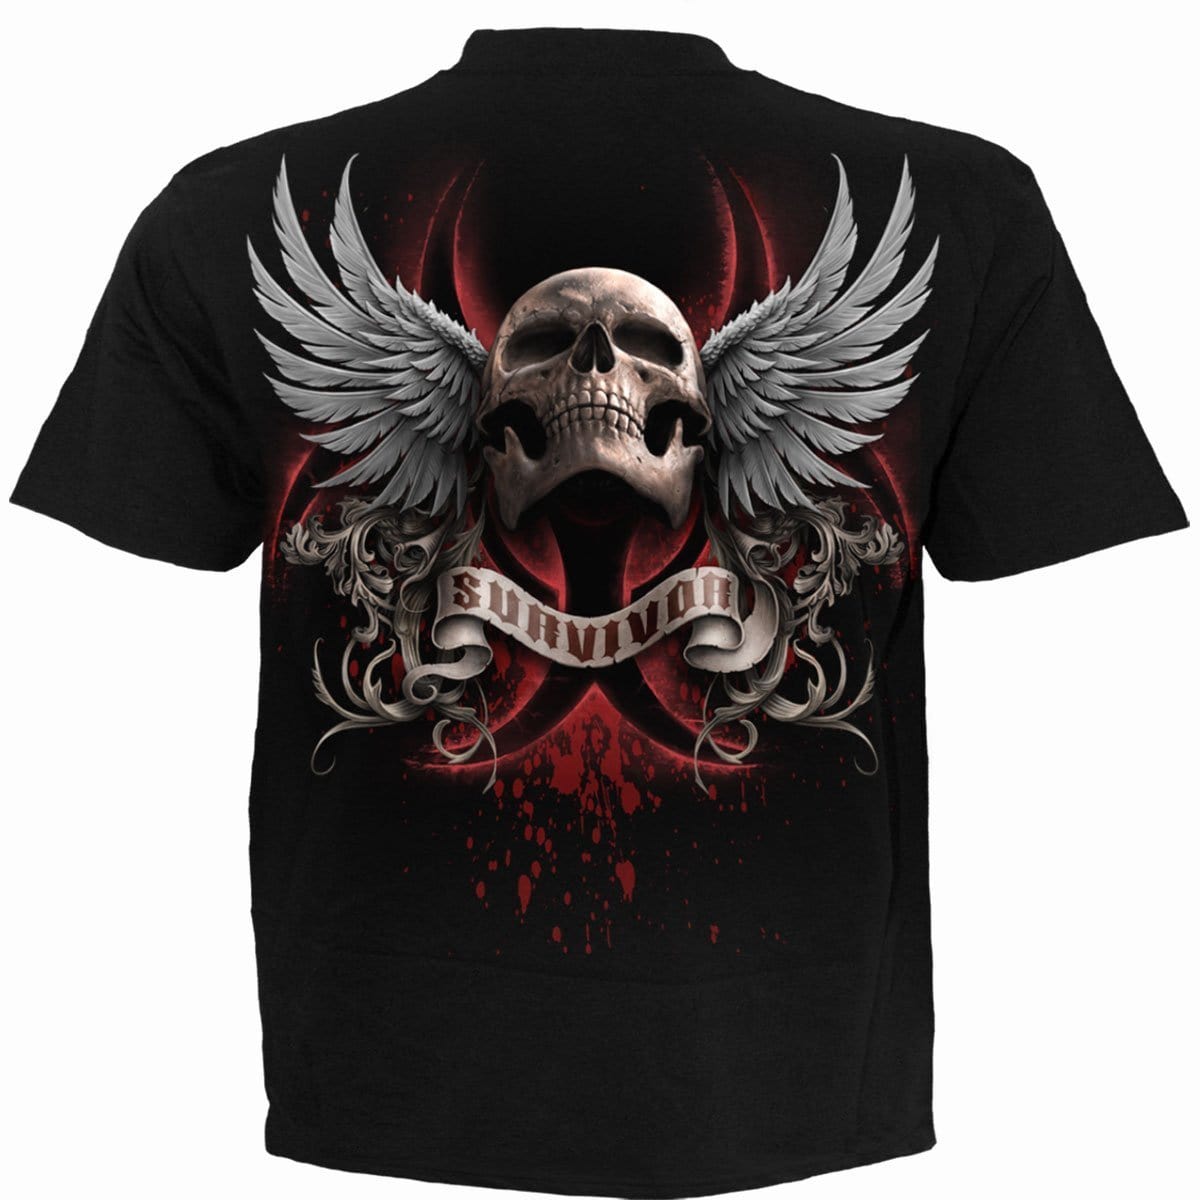 LOCKDOWN 2020 - T-Shirt Black - Spiral USA